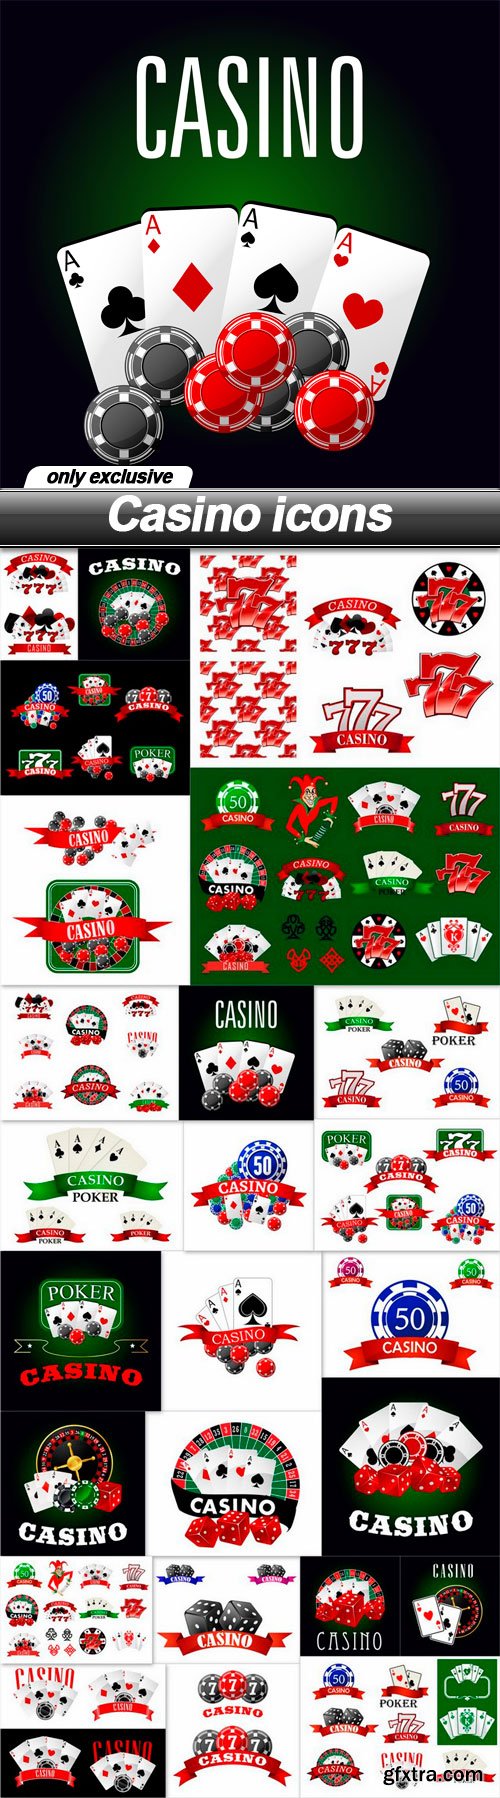 Casino icons - 25 EPS